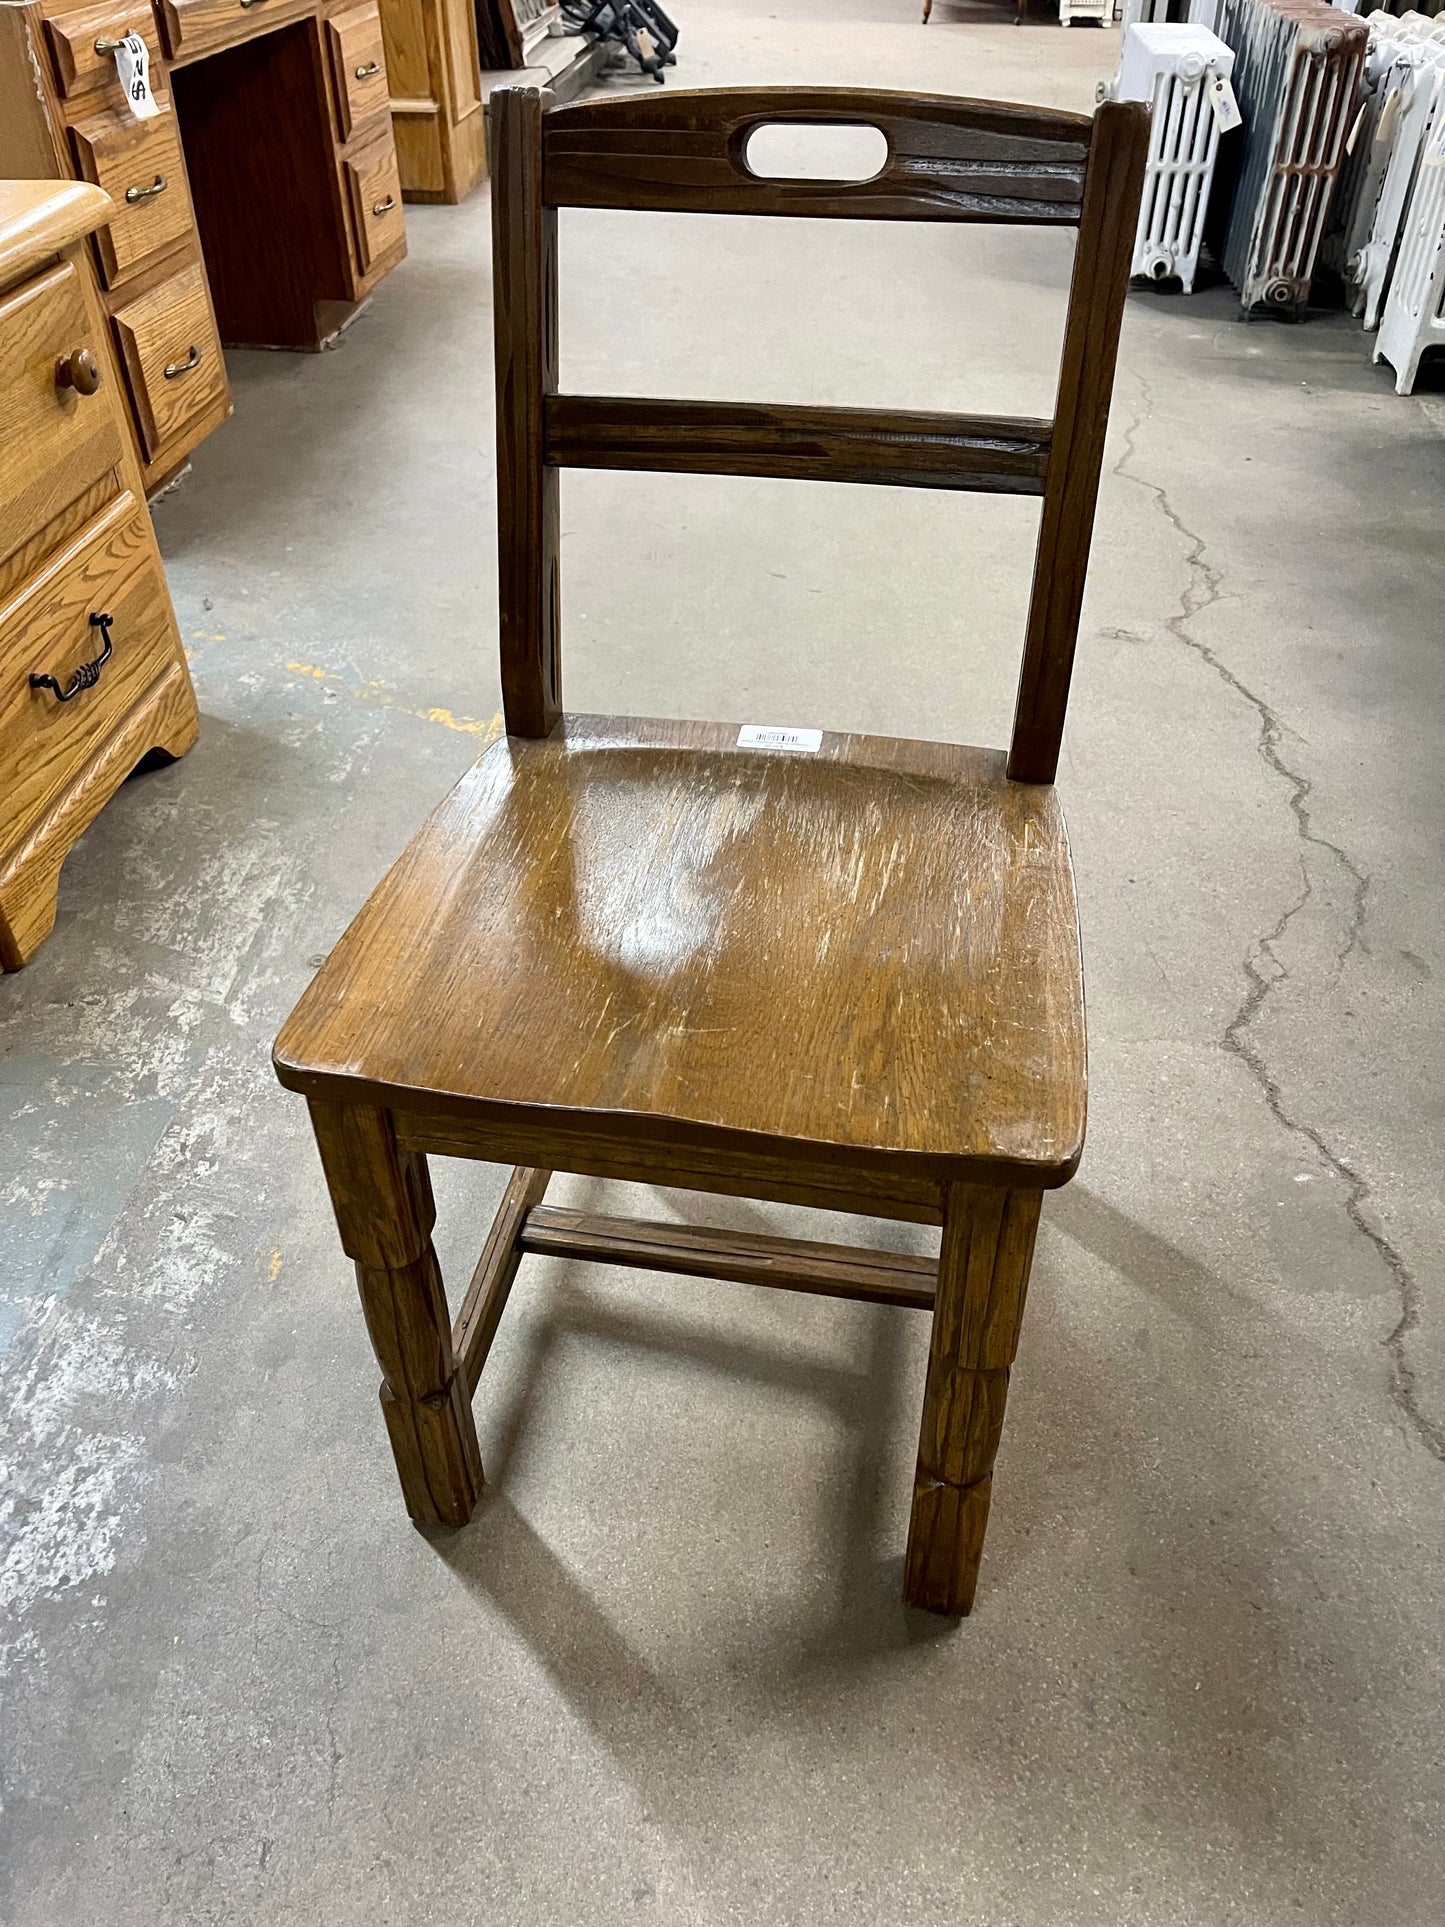 Vintage Rustic Wooden Chair